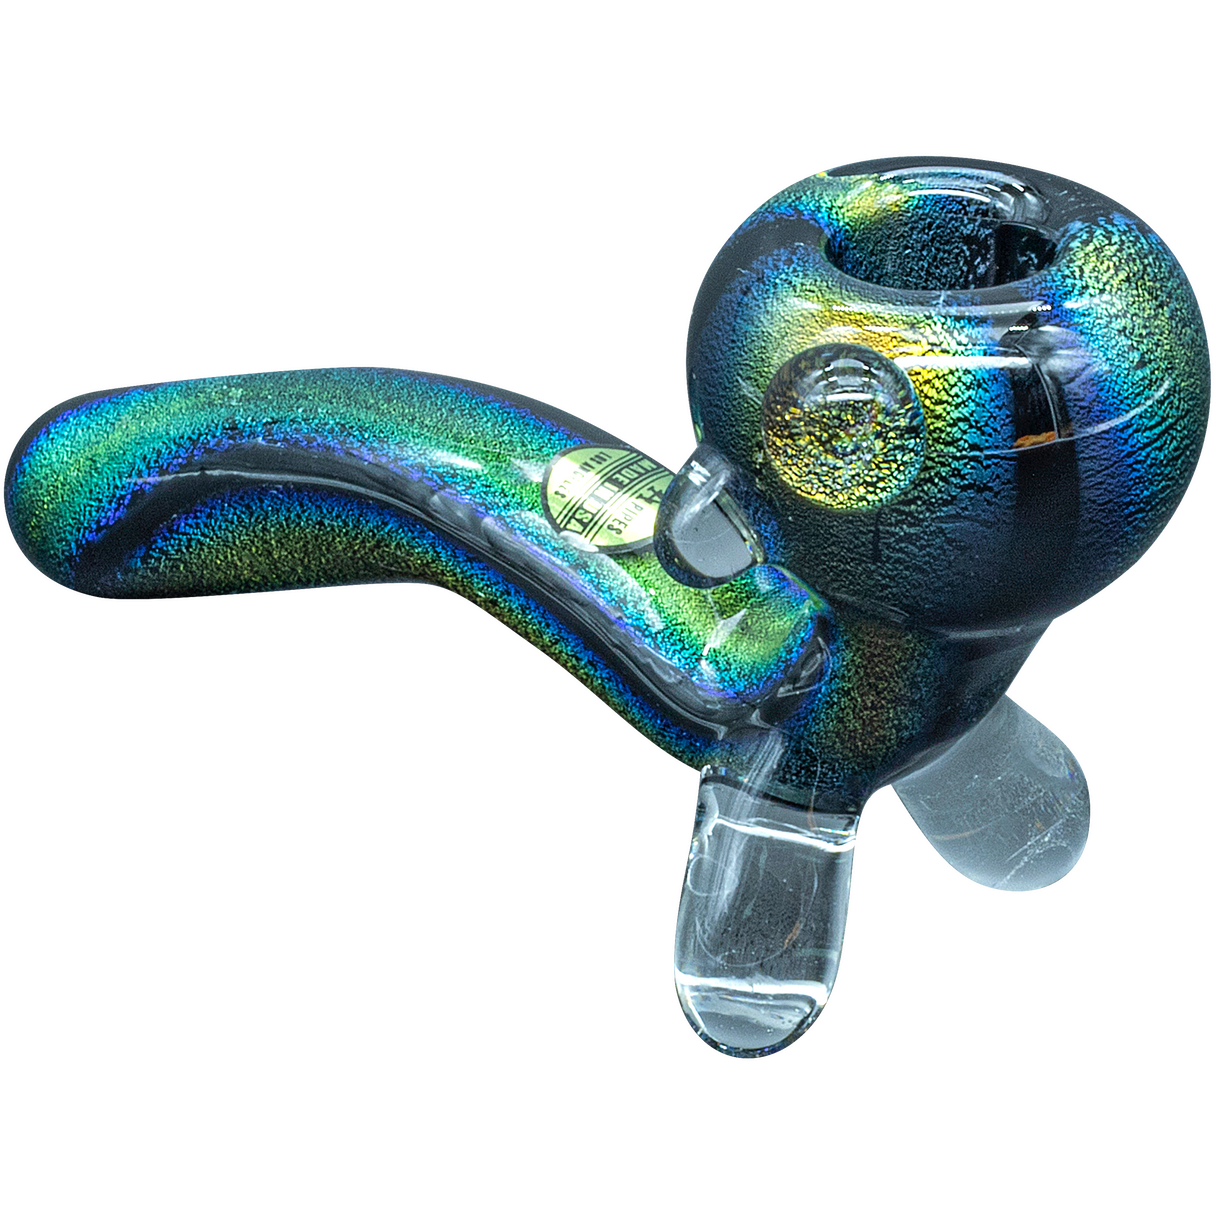 LA Pipes "The Galaxy" Full Dichroic Sherlock Pipe, 4.35" Borosilicate Glass, USA-Made